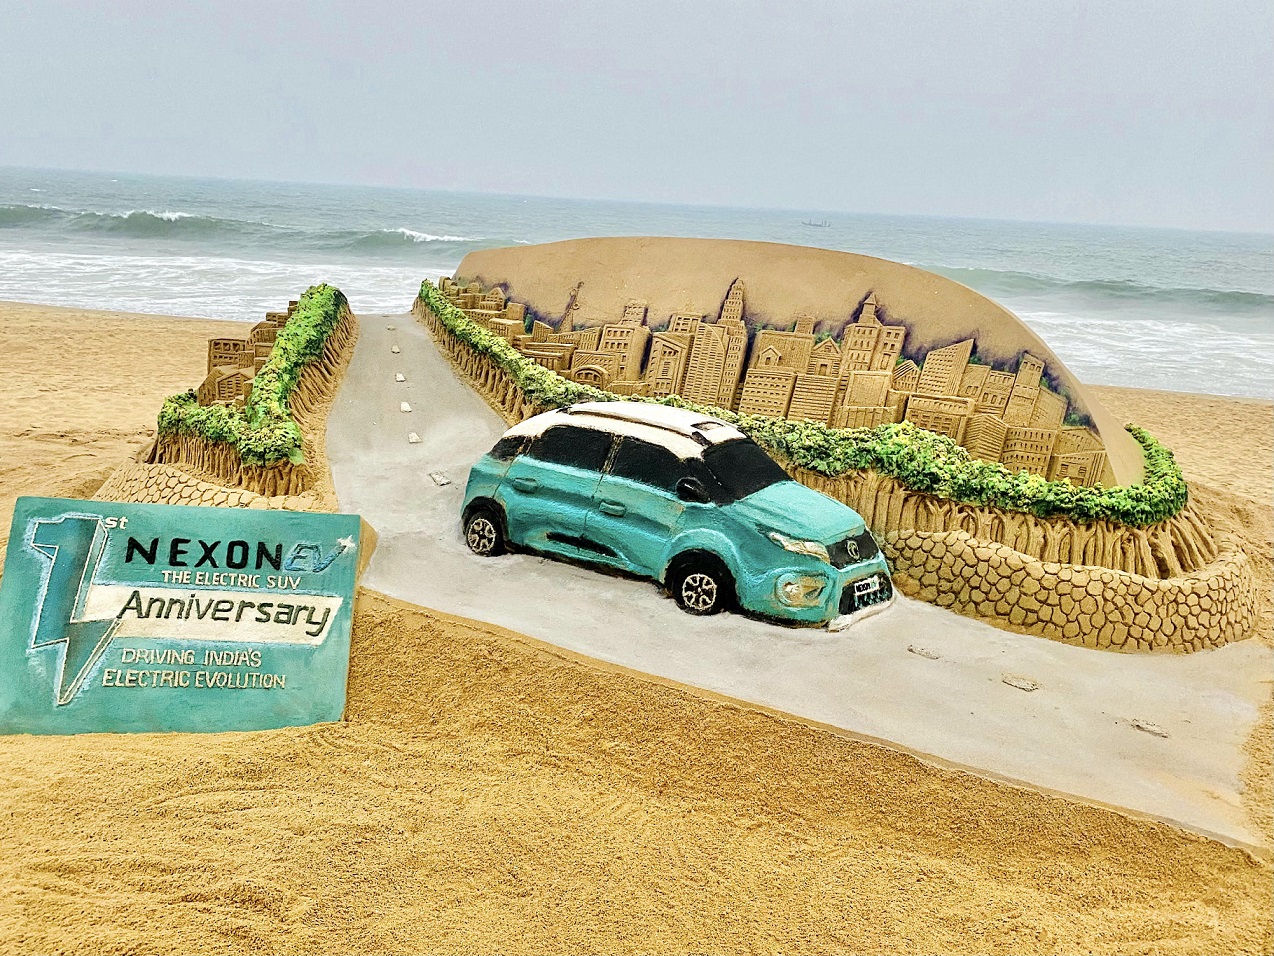 Tata Nexon EV Celebrates 1st Anniversary of Successfully Driving eMobility Revolution In India